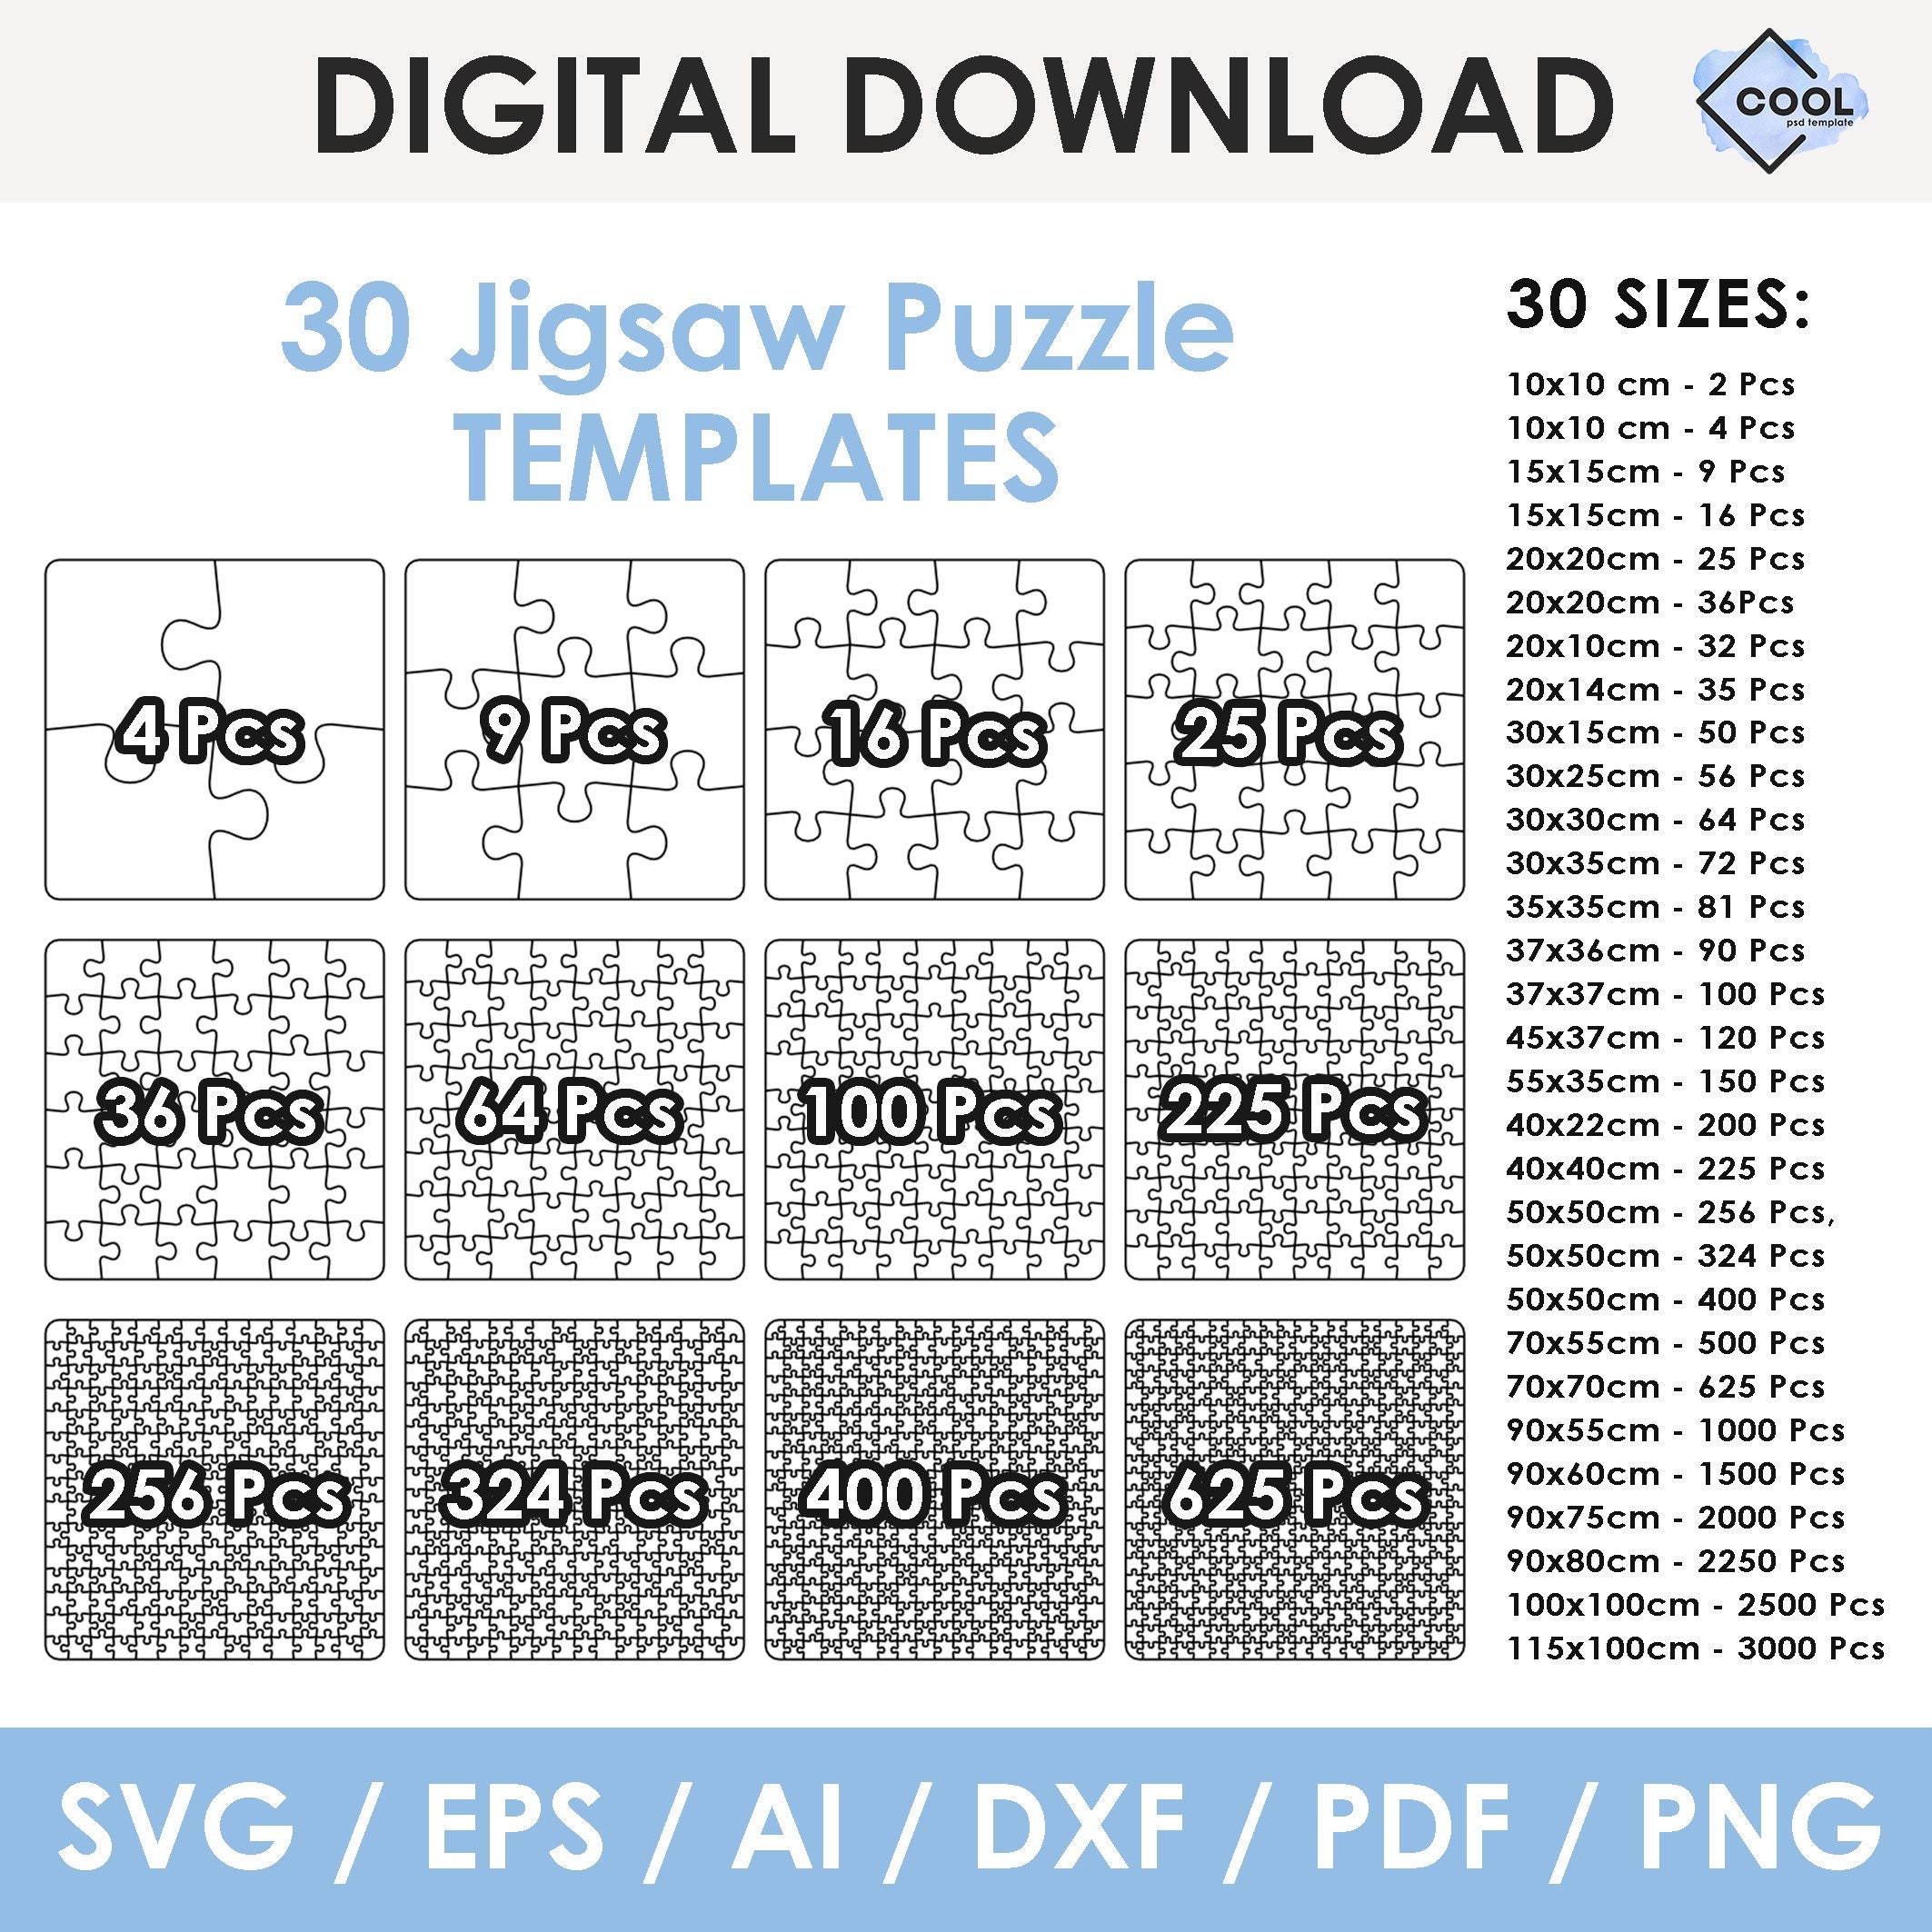 Blank 12x16.5 Inch Jigsaw Puzzle 285 Pieces 